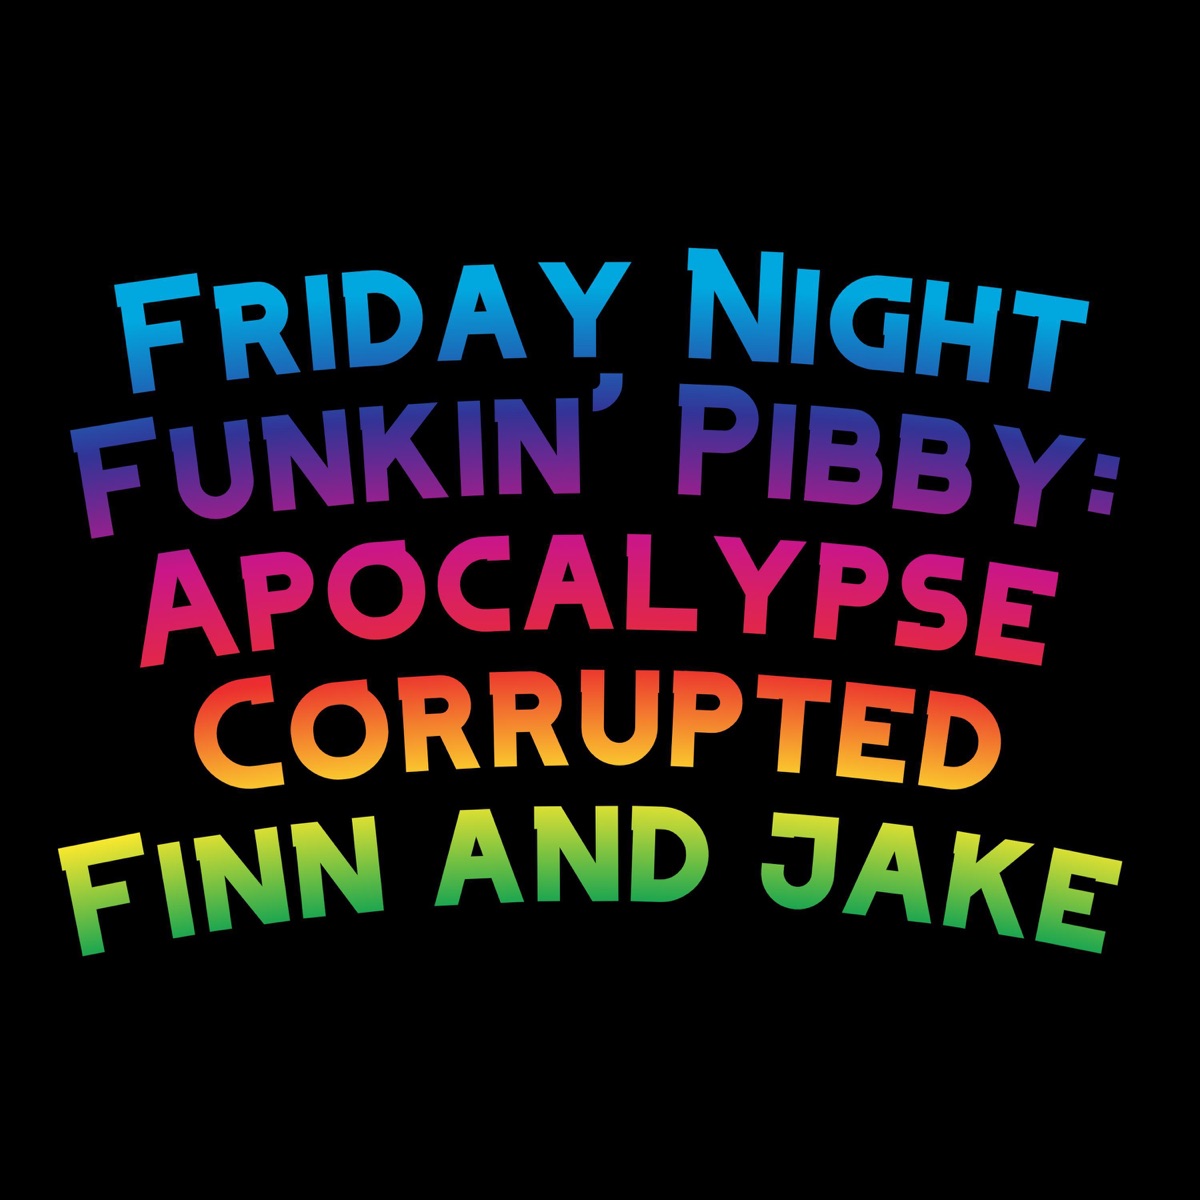 FNF Pibby Apocalypse - Mindless 